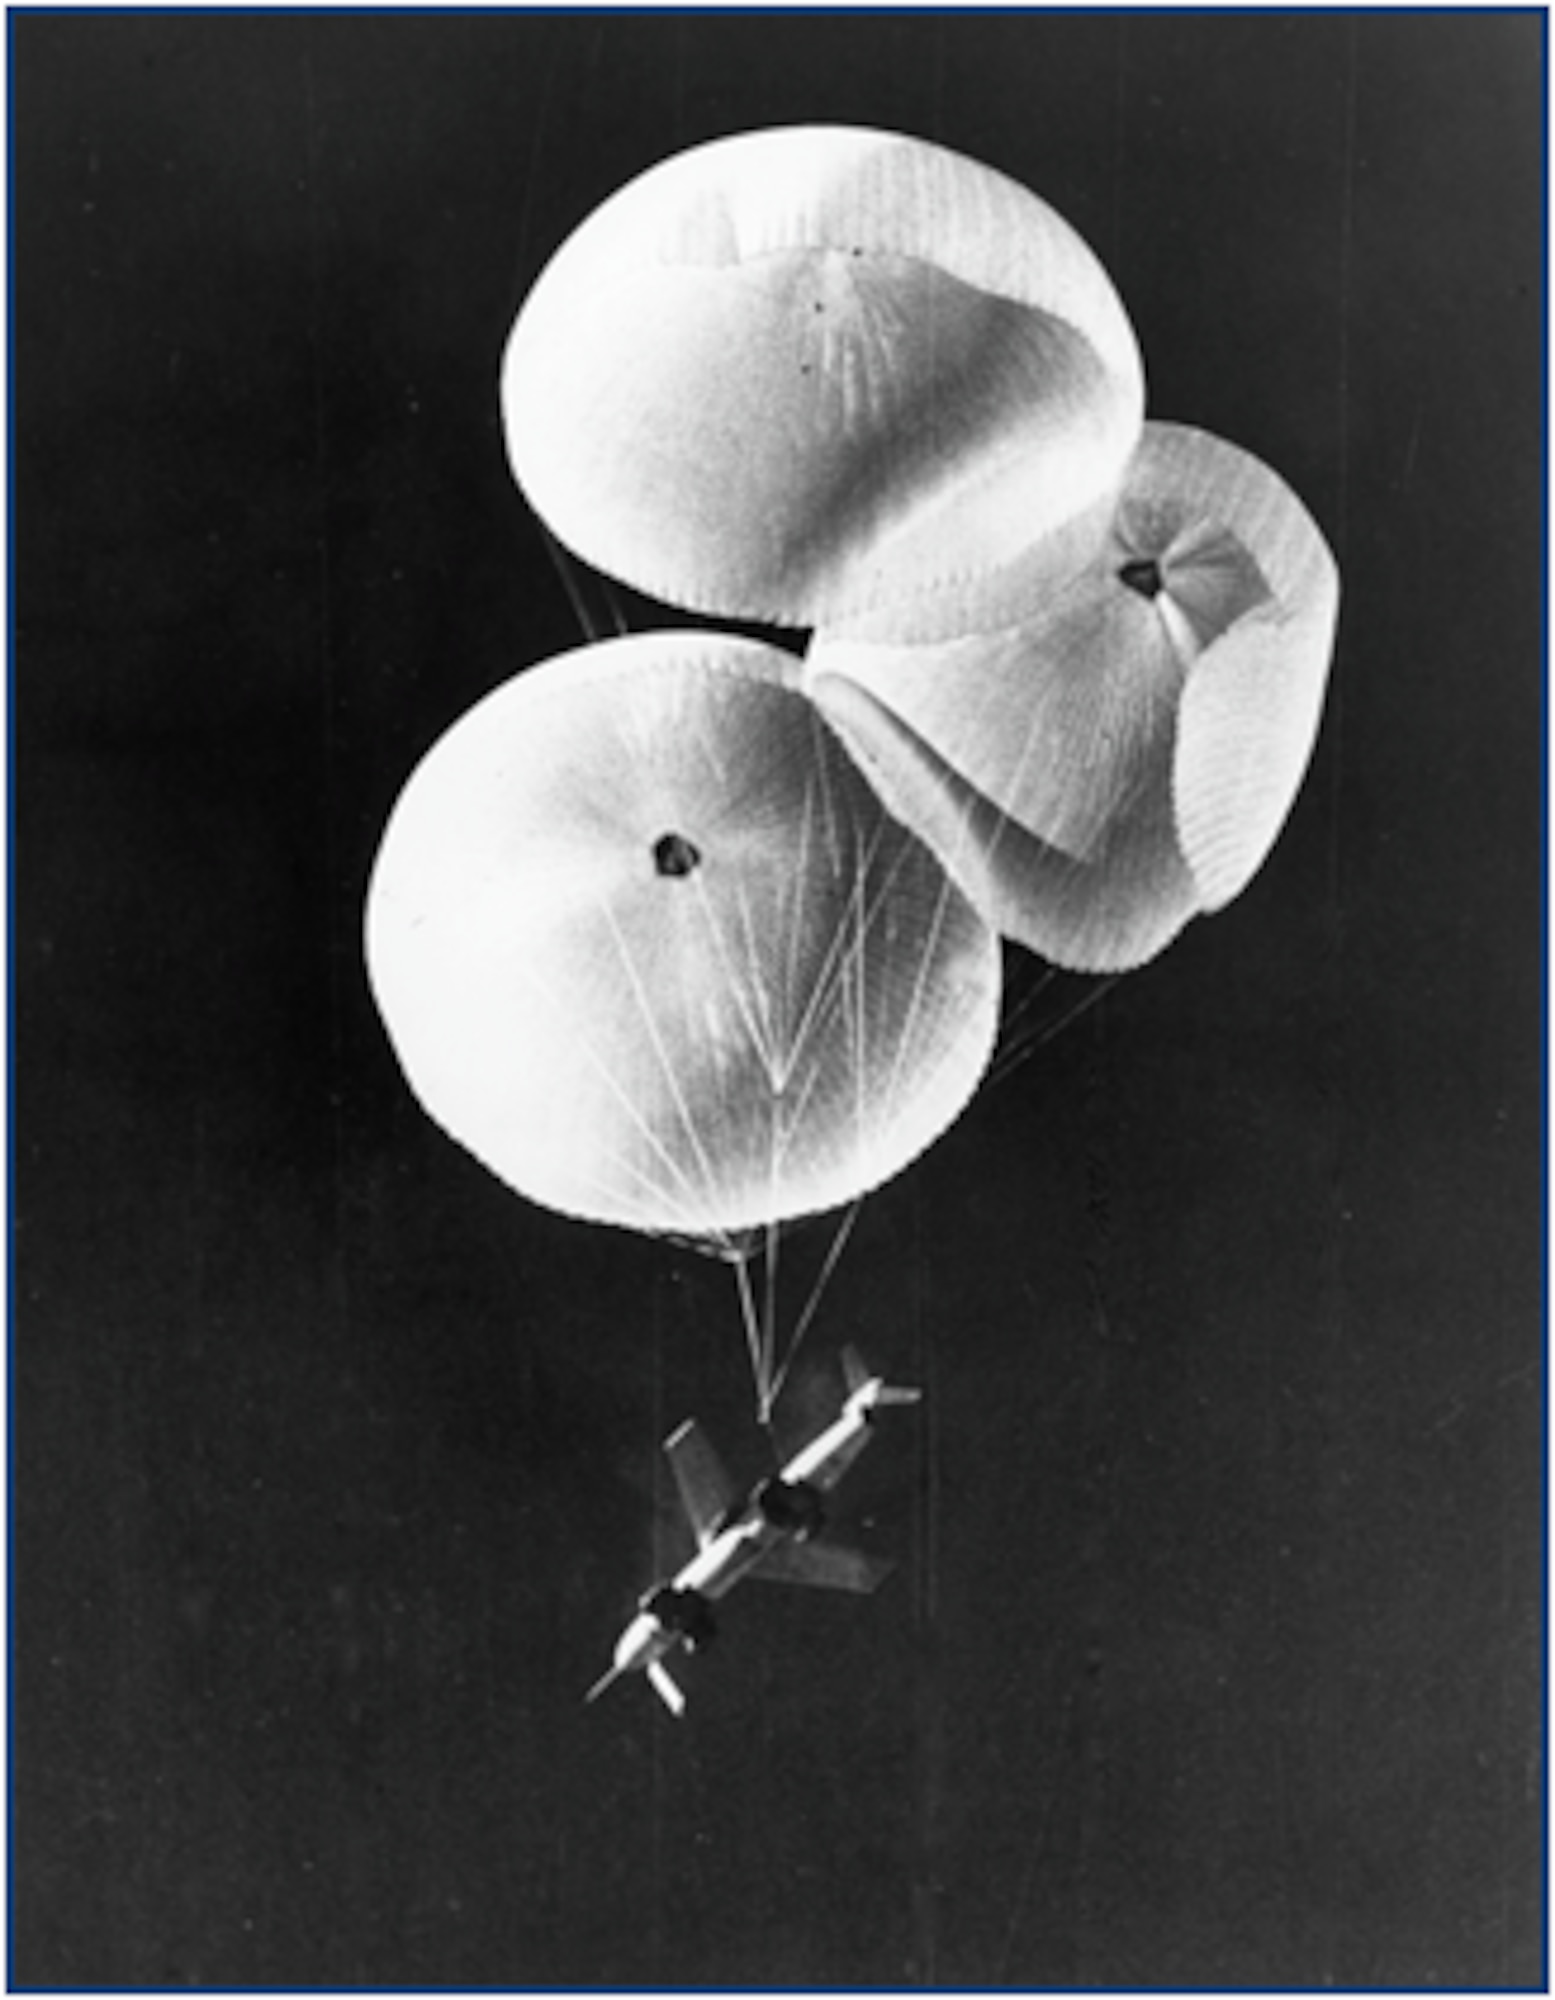 Parachute system photo